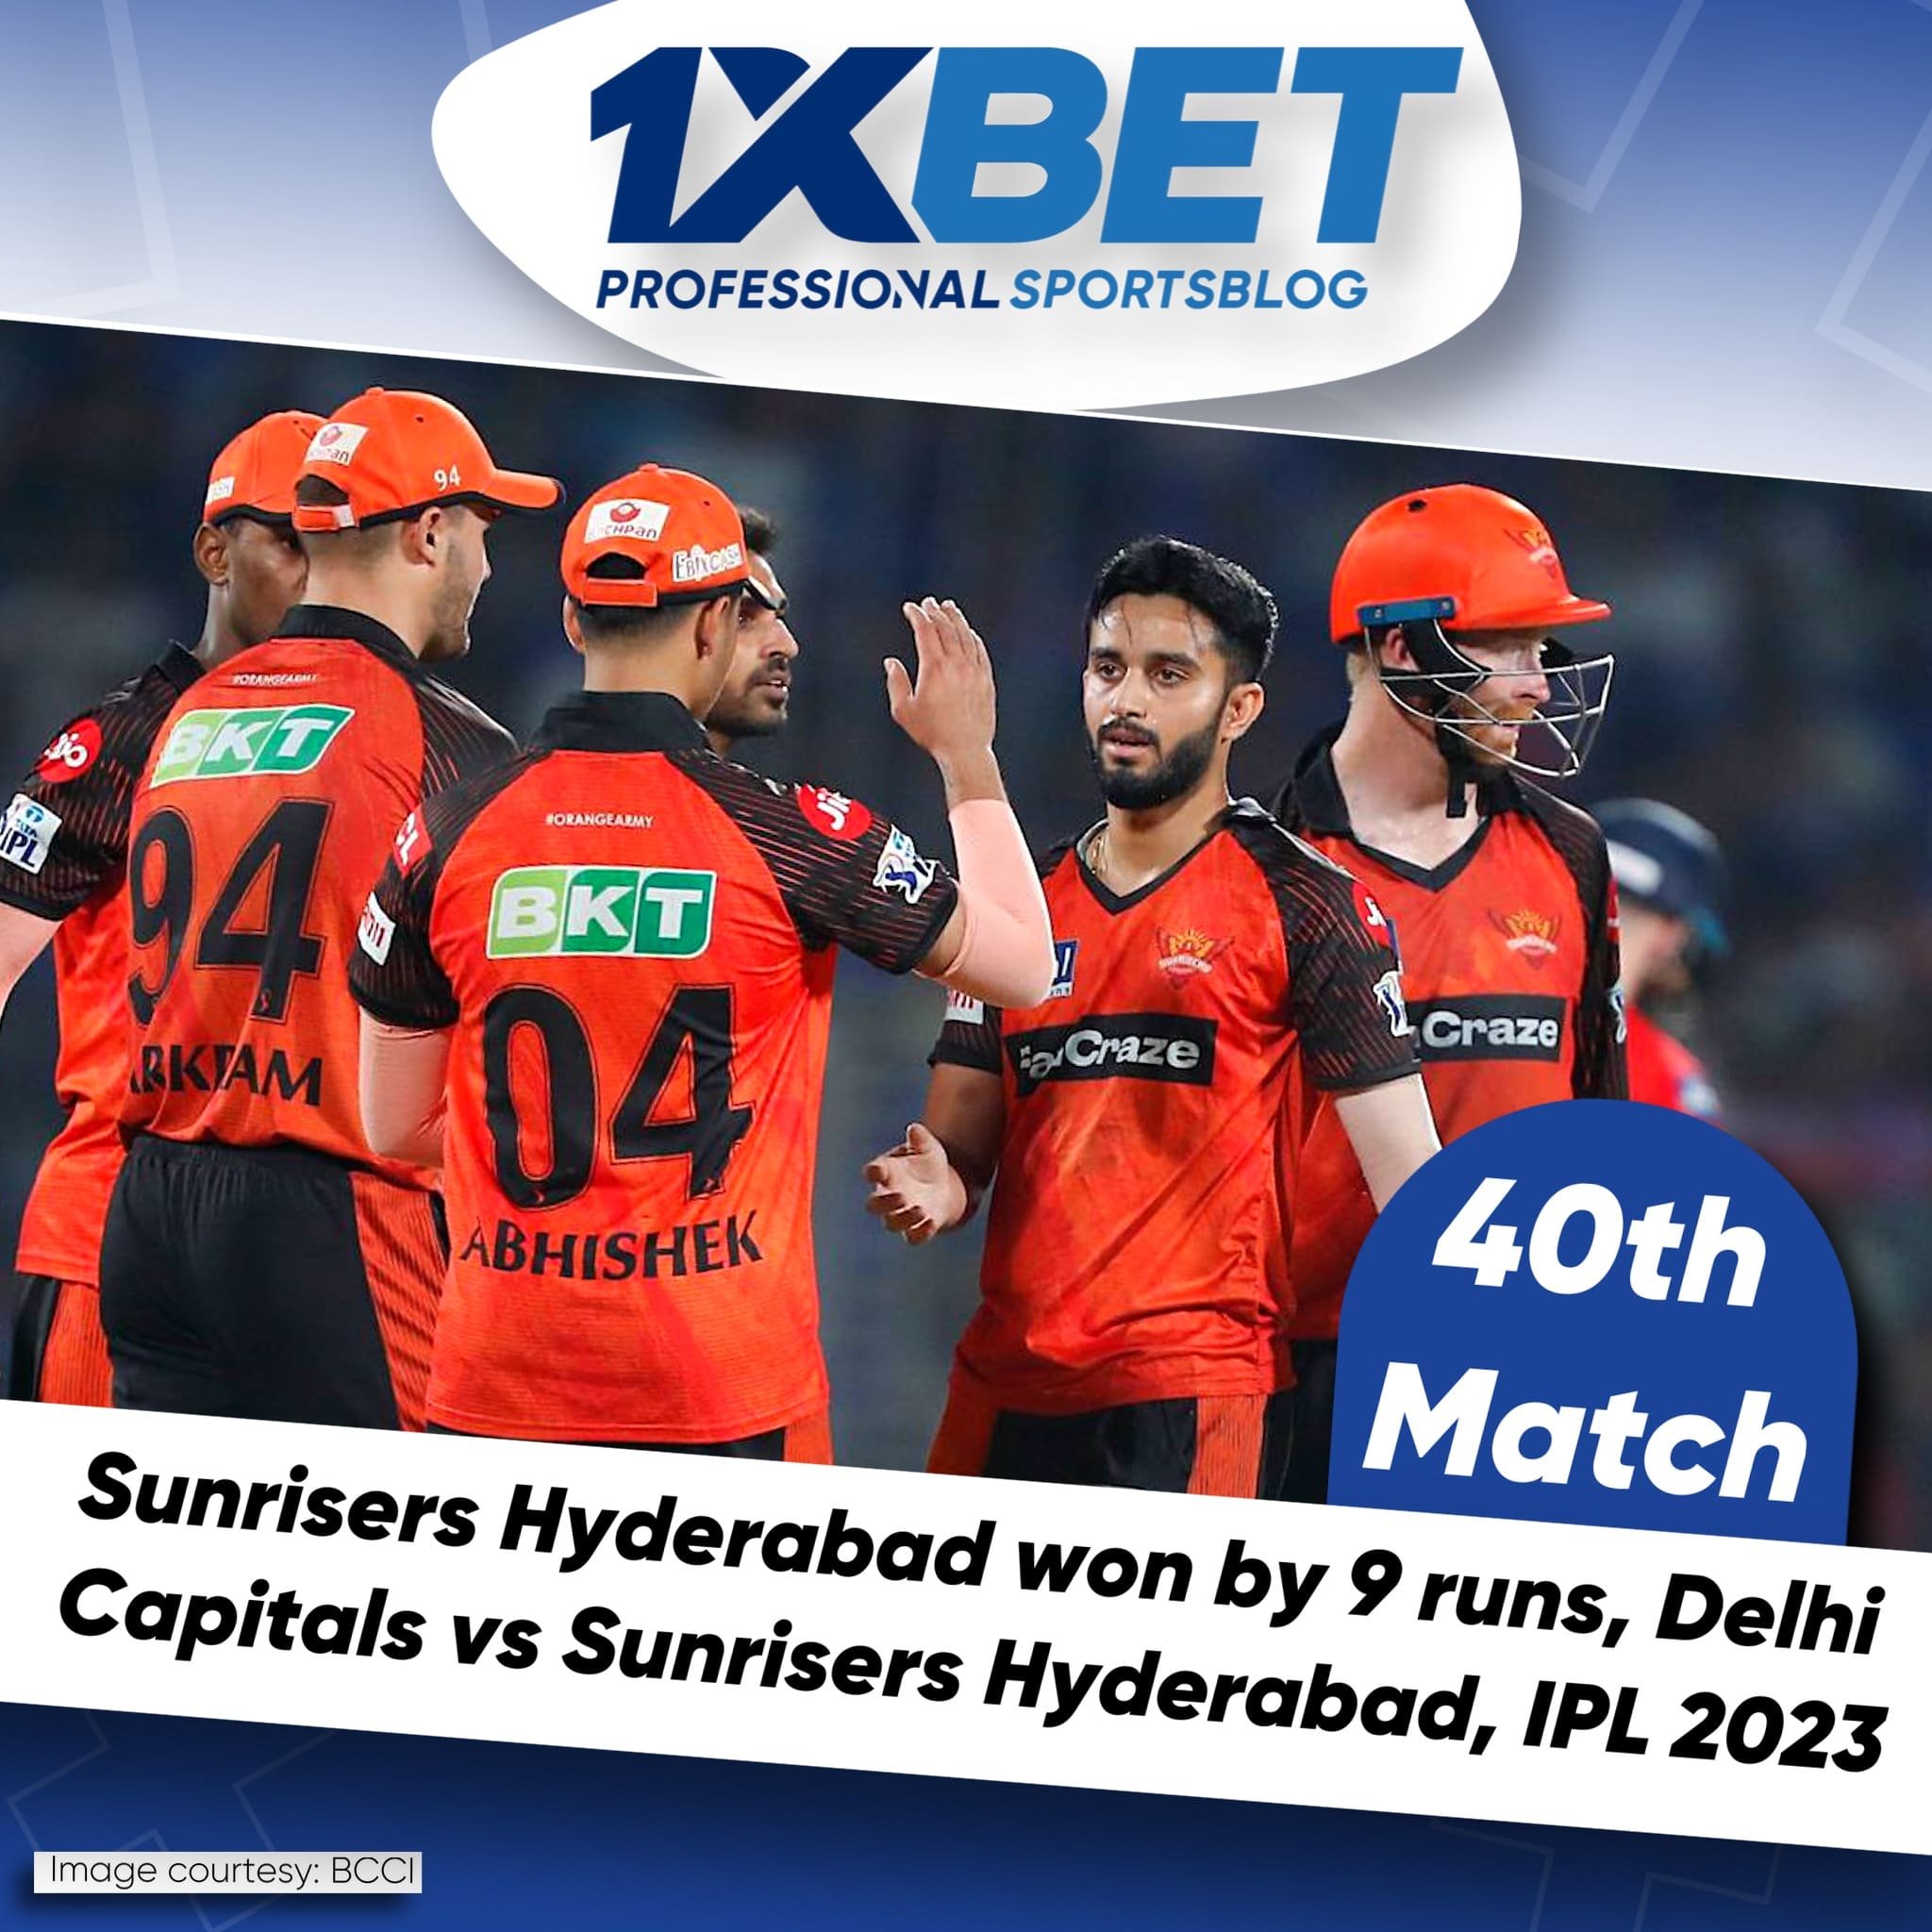 Sunrisers Hyderabad won by 9 runs